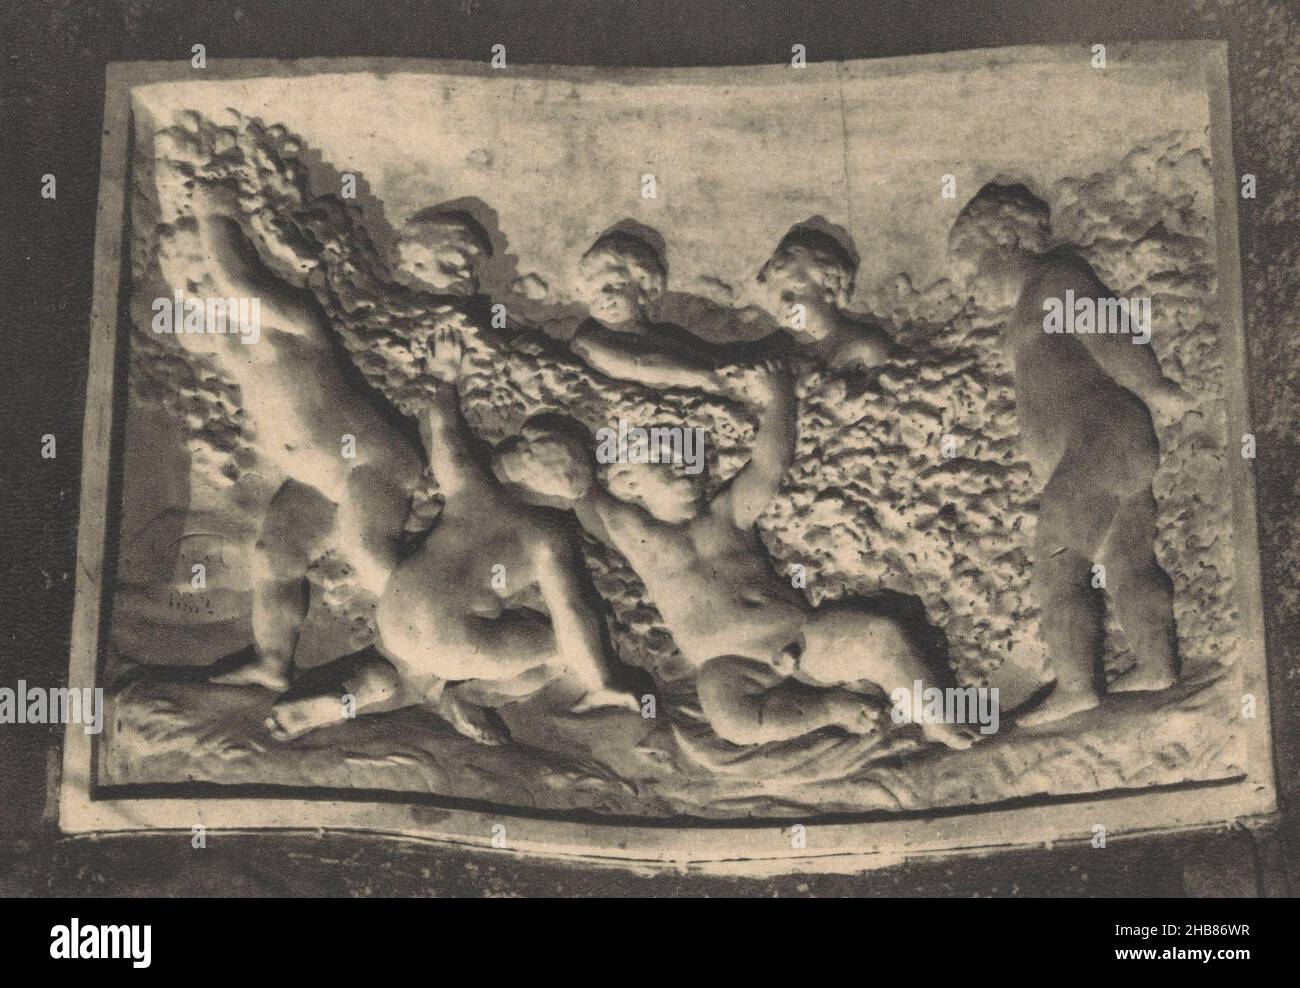 Jeunes maraudeurs, Bas-relief sculpté dans la craie (title on object), maker: Helio-Cachan (mentioned on object), 1930 - 1960, paper, height 101 mm × width 150 mm Stock Photo